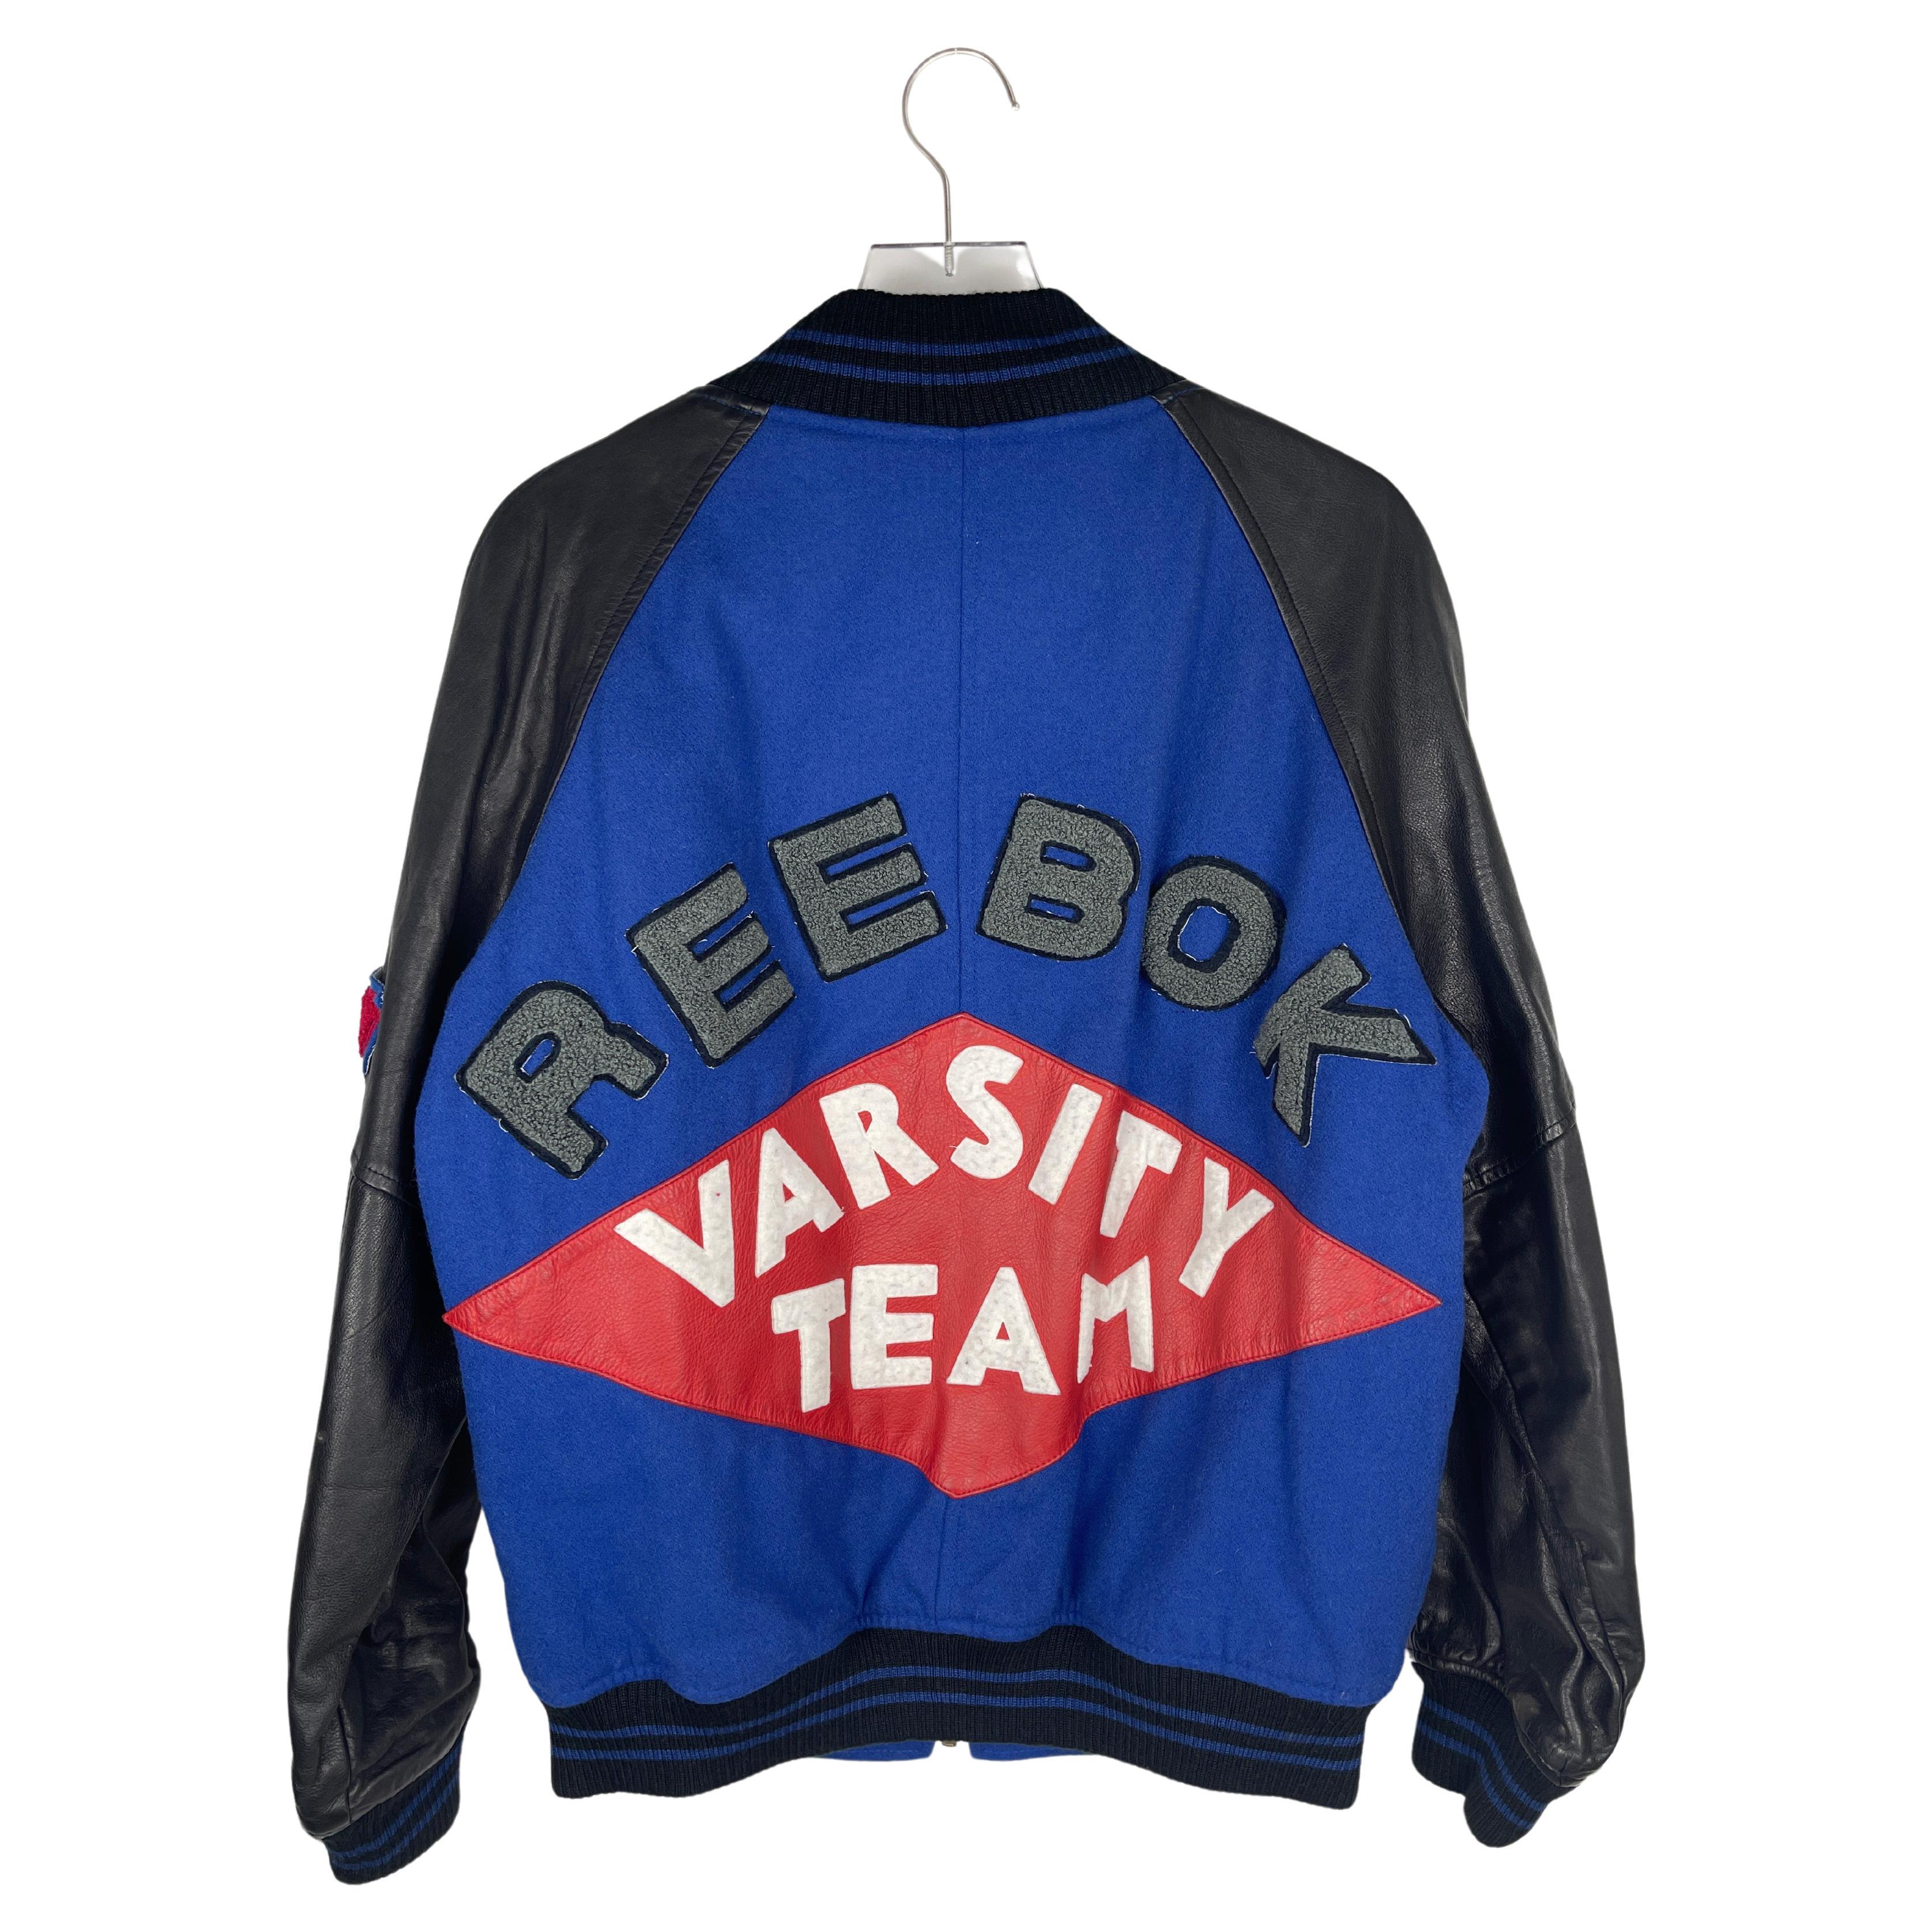 Vintage Reebok 1990's Varsity Team Jacket For Sale